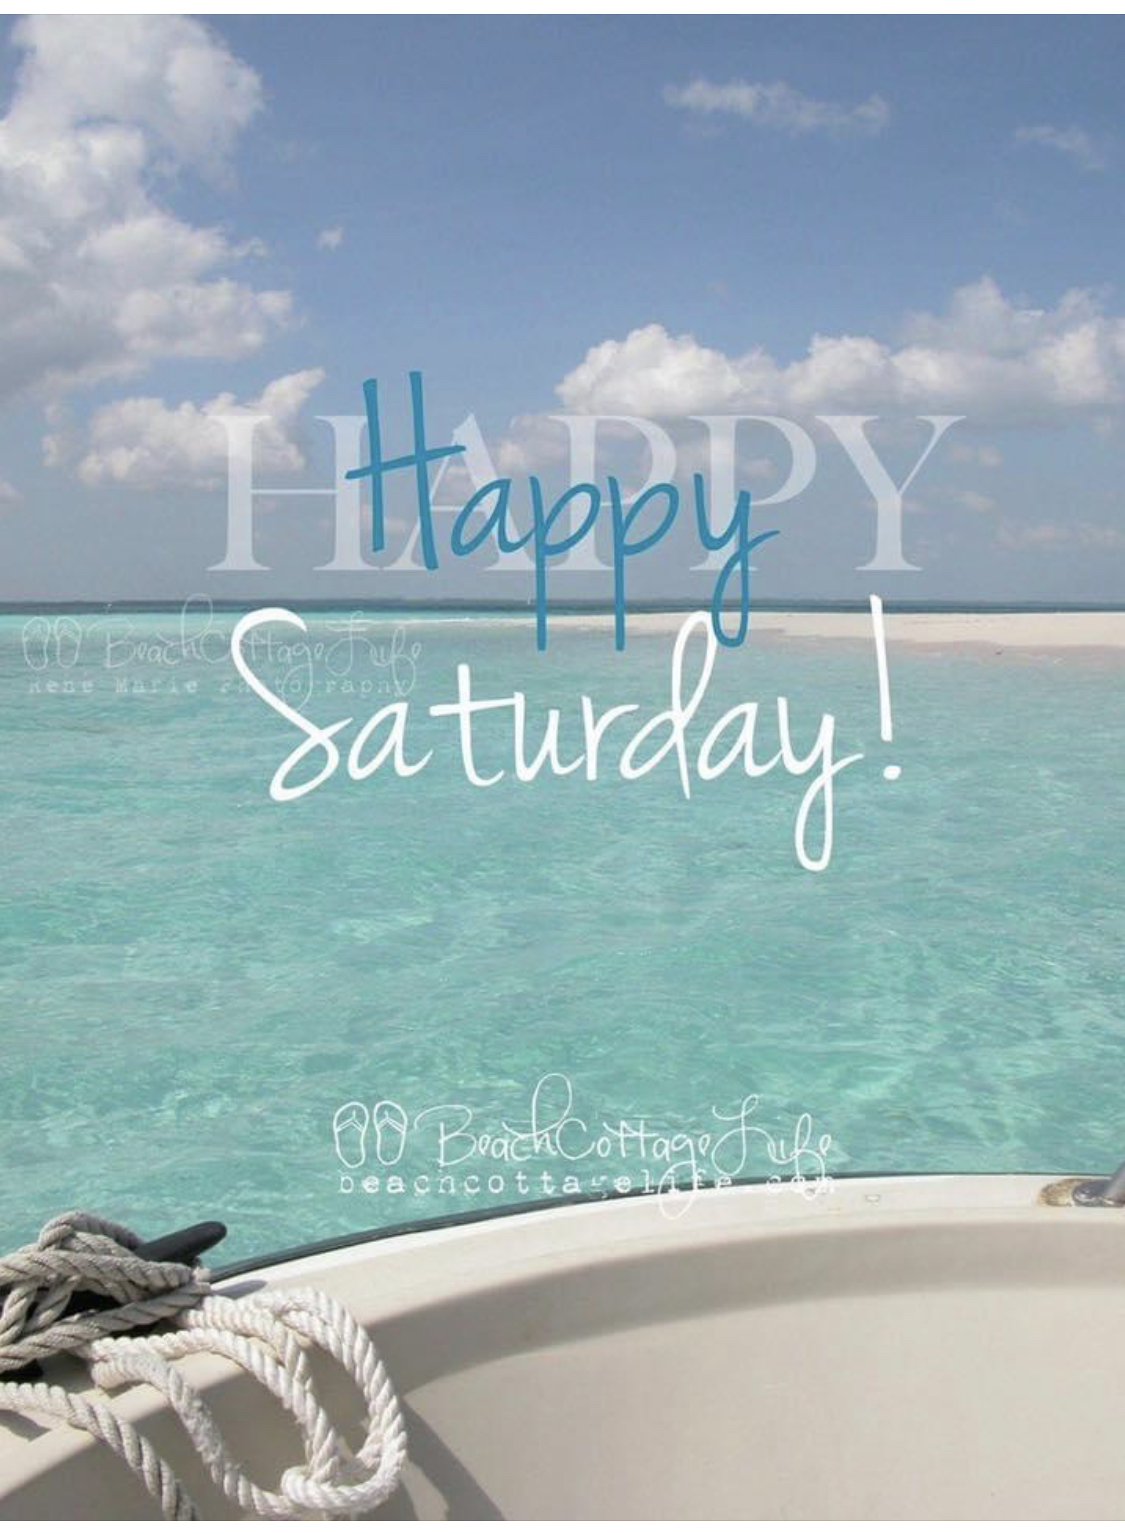 Happy Saturday loves ♥️